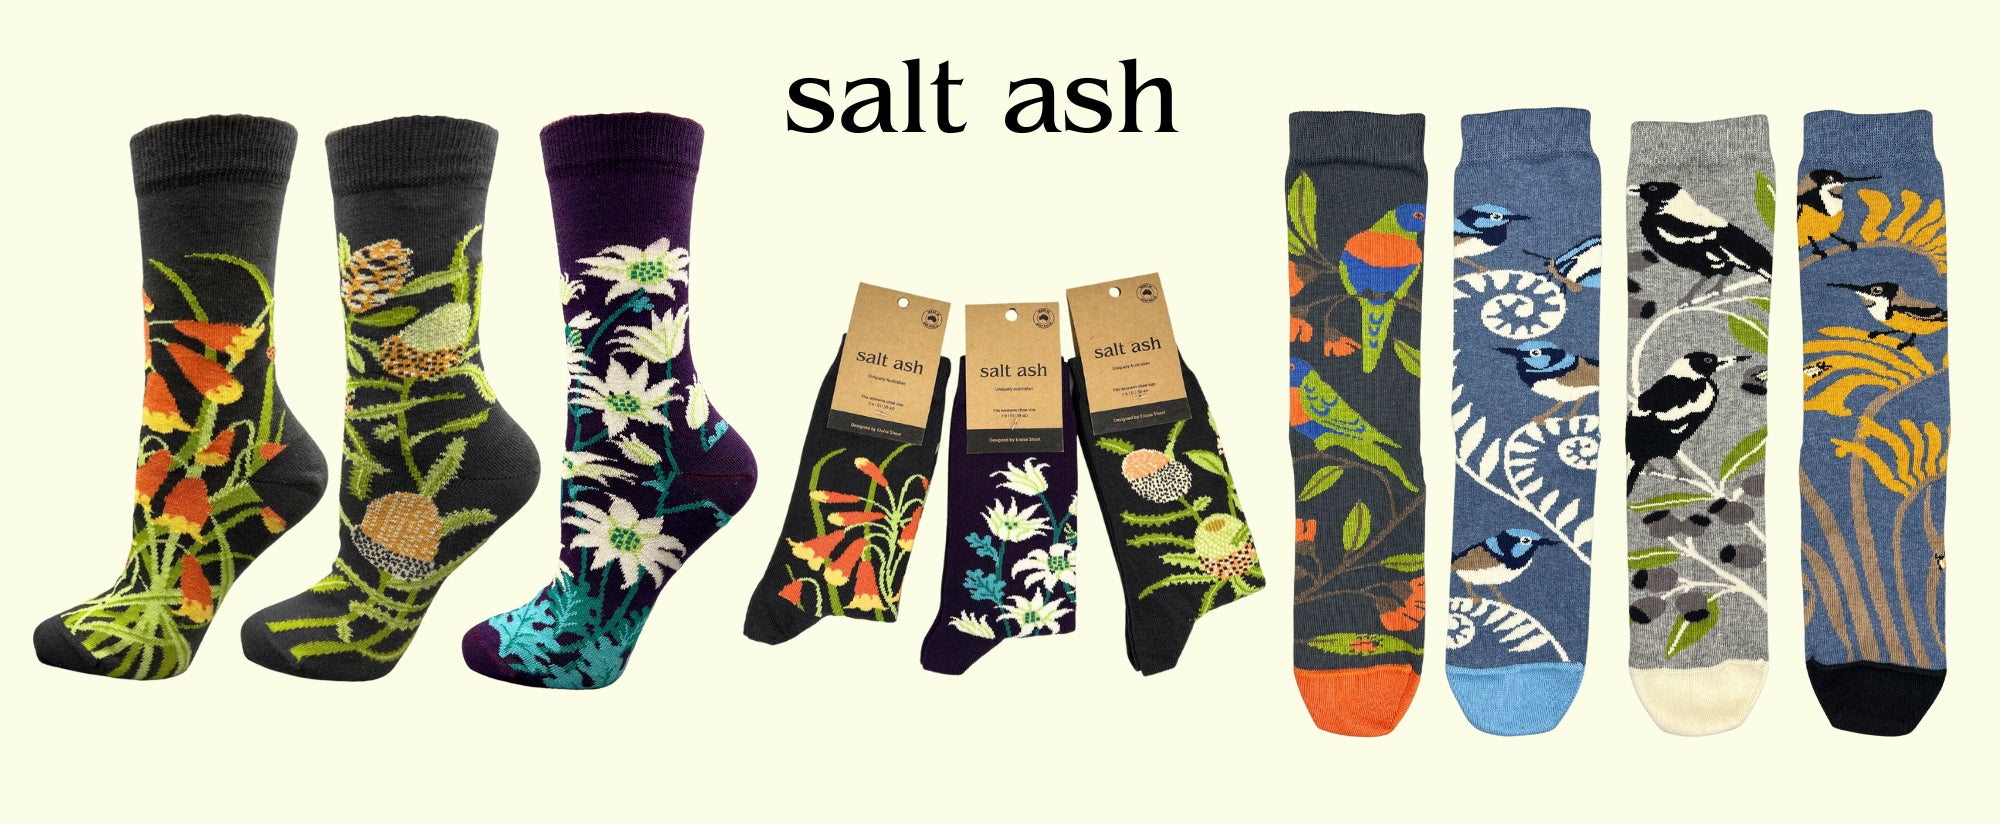 Salt Ash Bundle 3 Pack - Choose Your Own